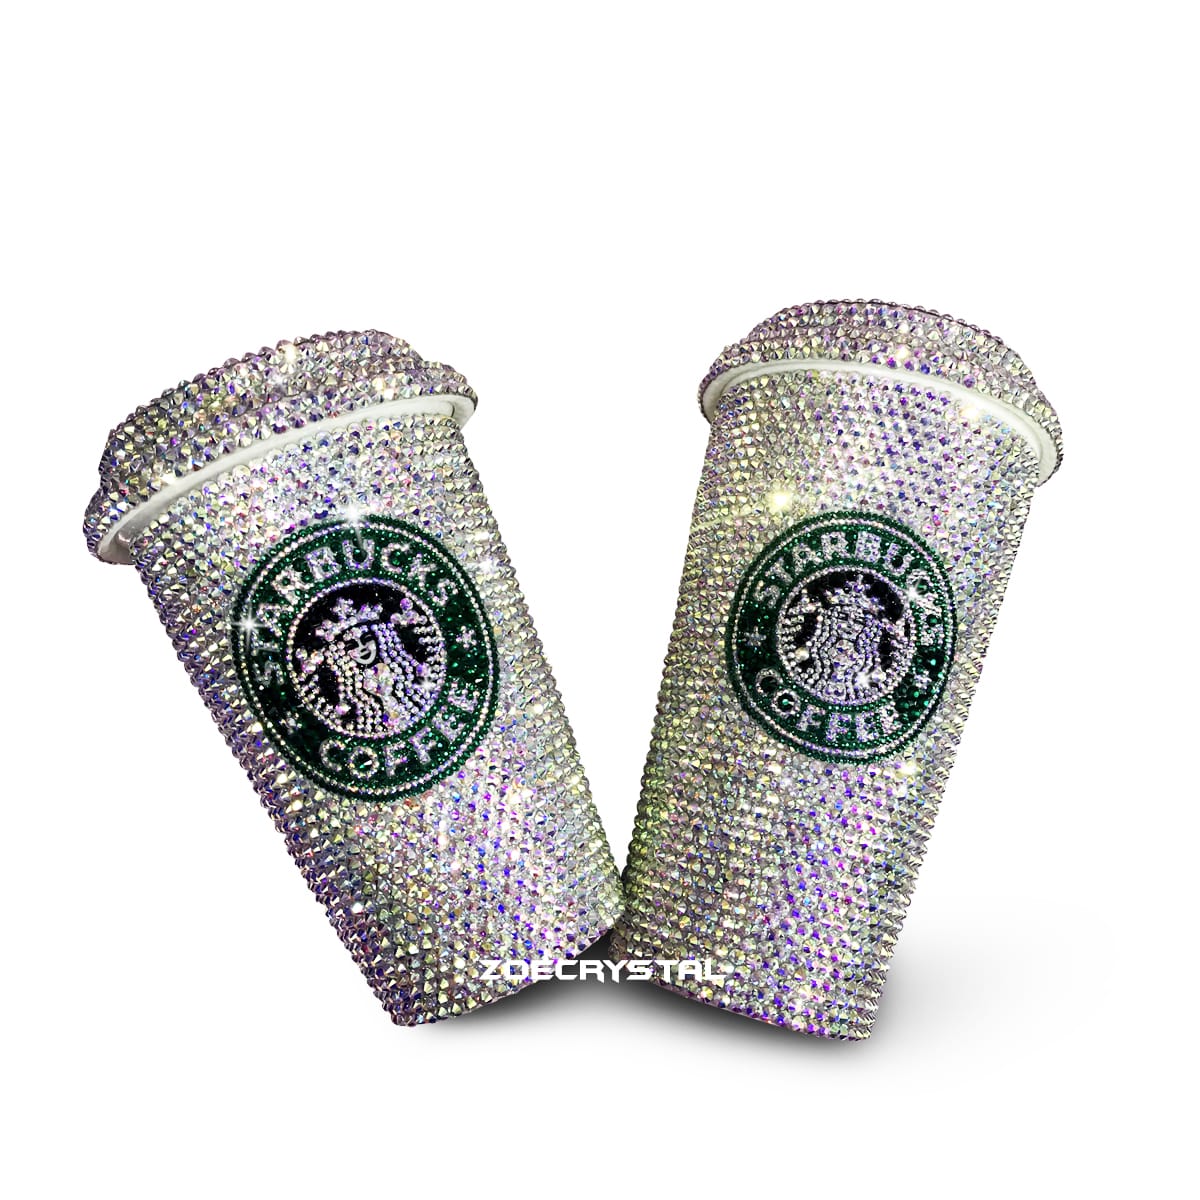 BLING STARBUCKS Coffee Cold Cup / Mug / Tumbler with Swarovski Crystal